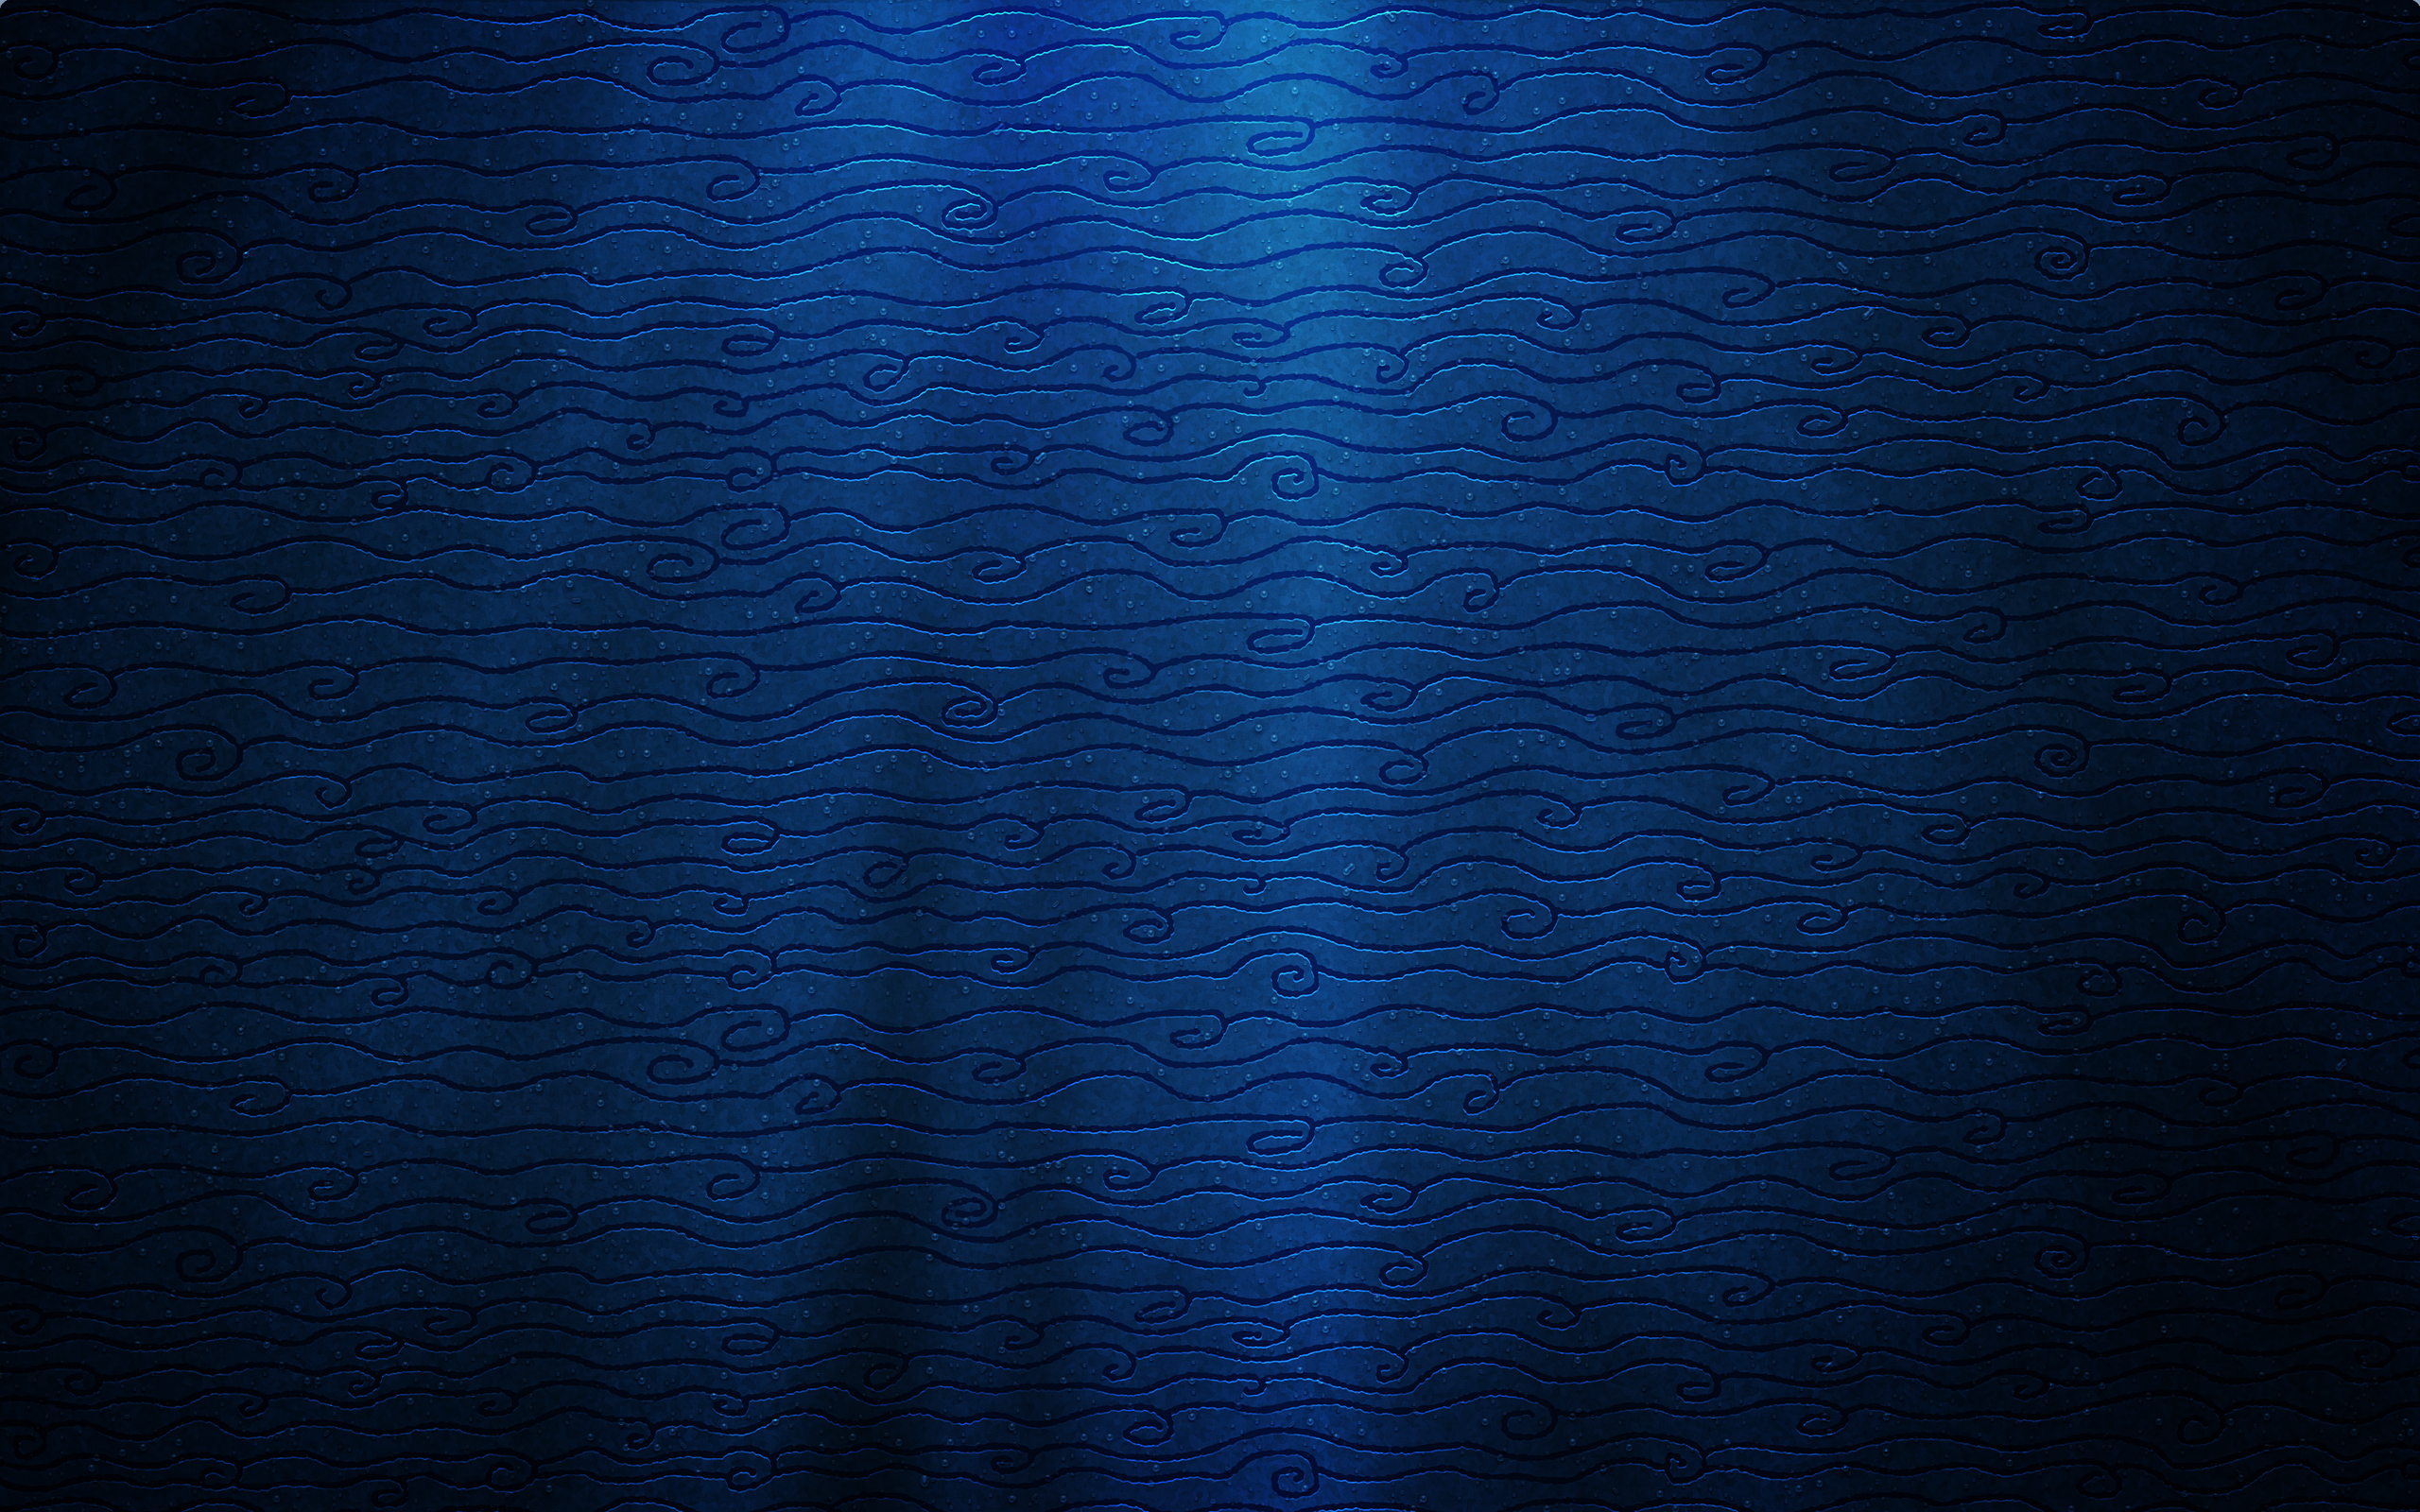 Blue Computer Wallpapers Desktop Backgrounds 2560x1600 ID86718 2560x1600